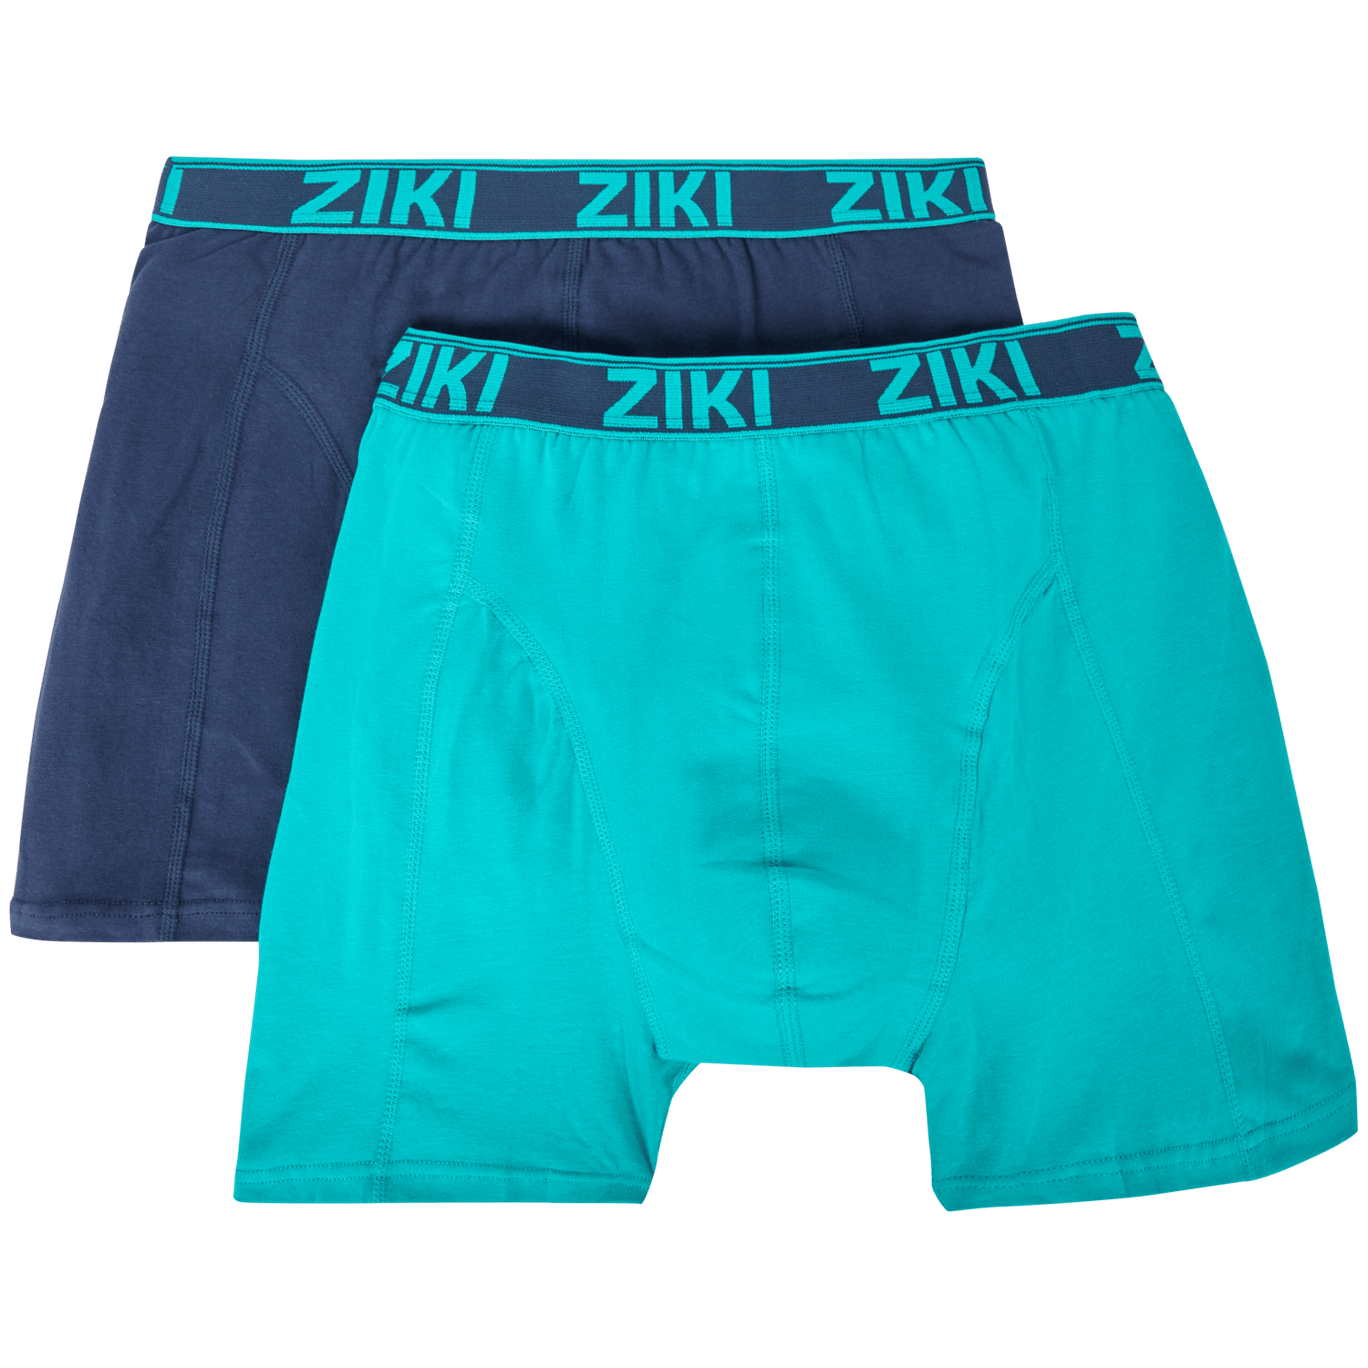 grind Commandant Symptomen Ziki boxershorts | Action.com